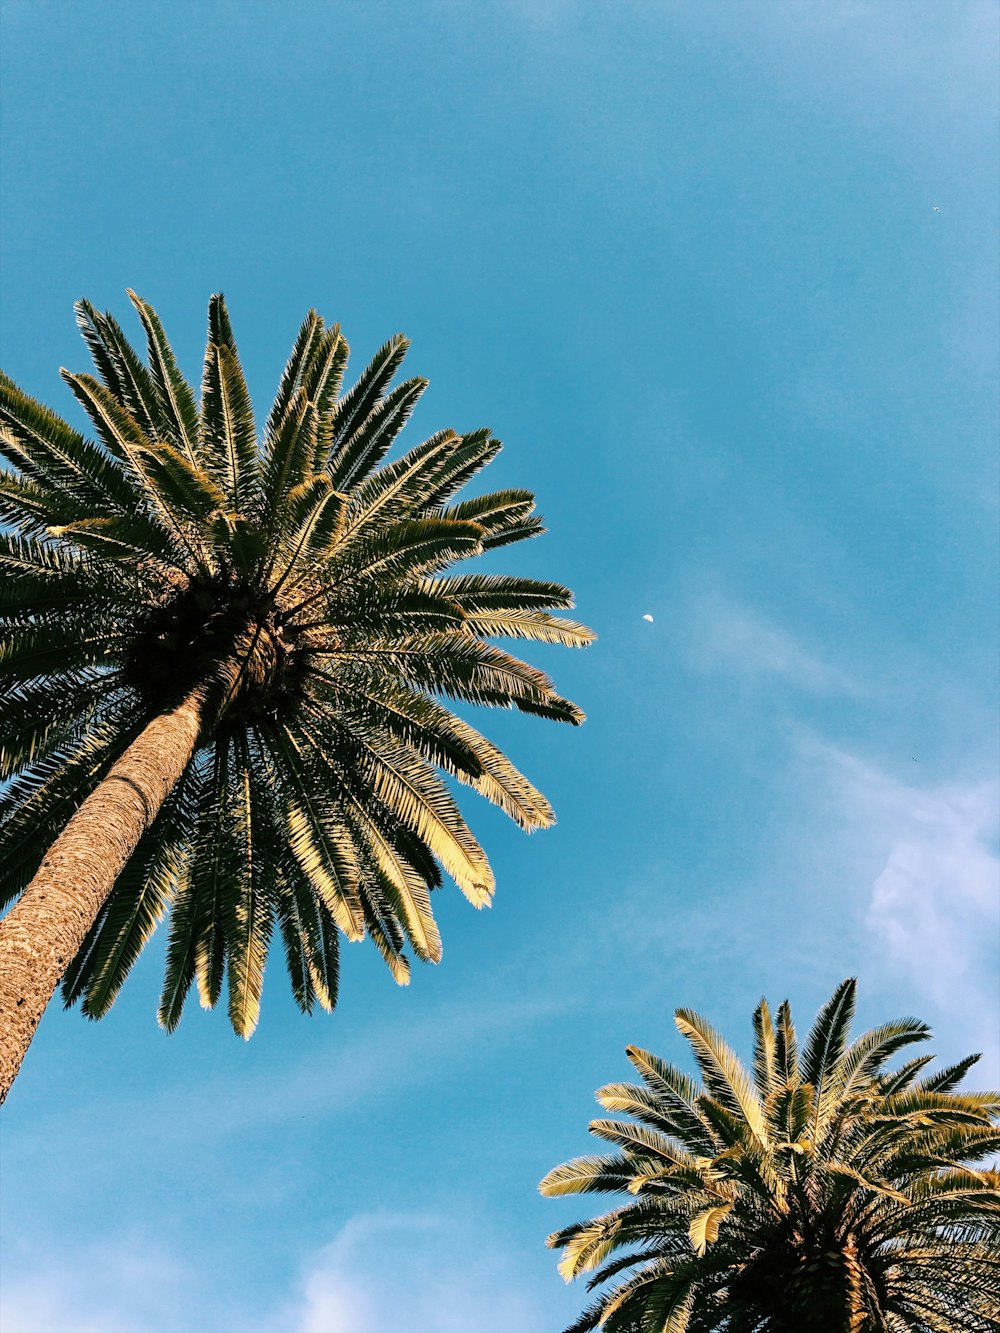 TWP-Palmen unter blauem Himmel am Tag